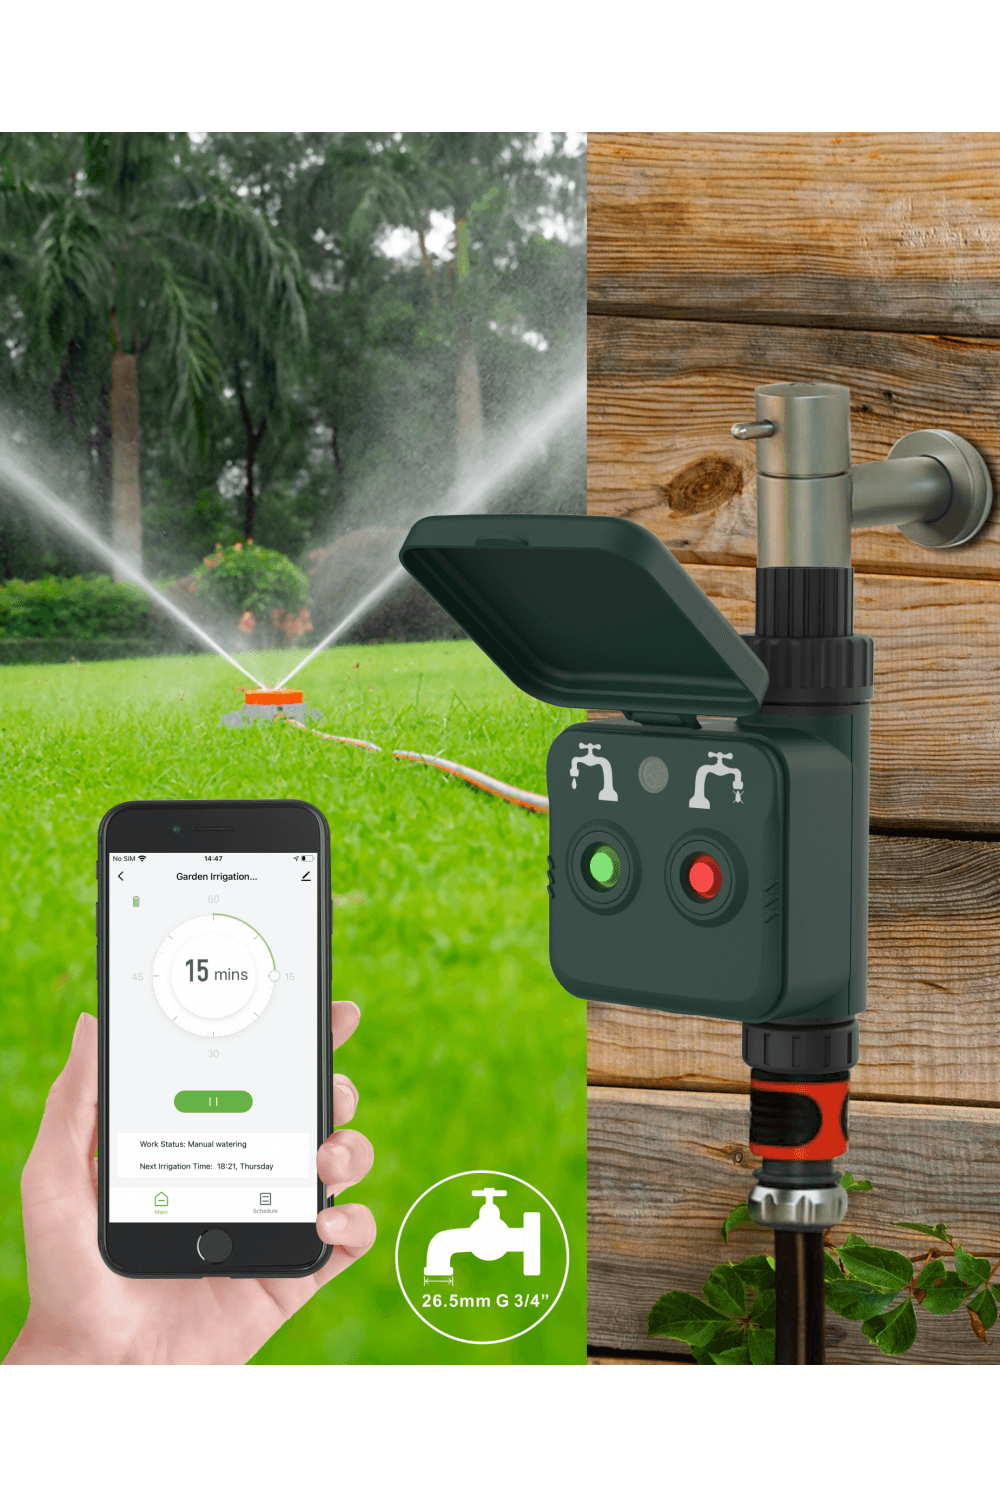 woox-r7060-smart-garden-irrigation-control-p61-479_image